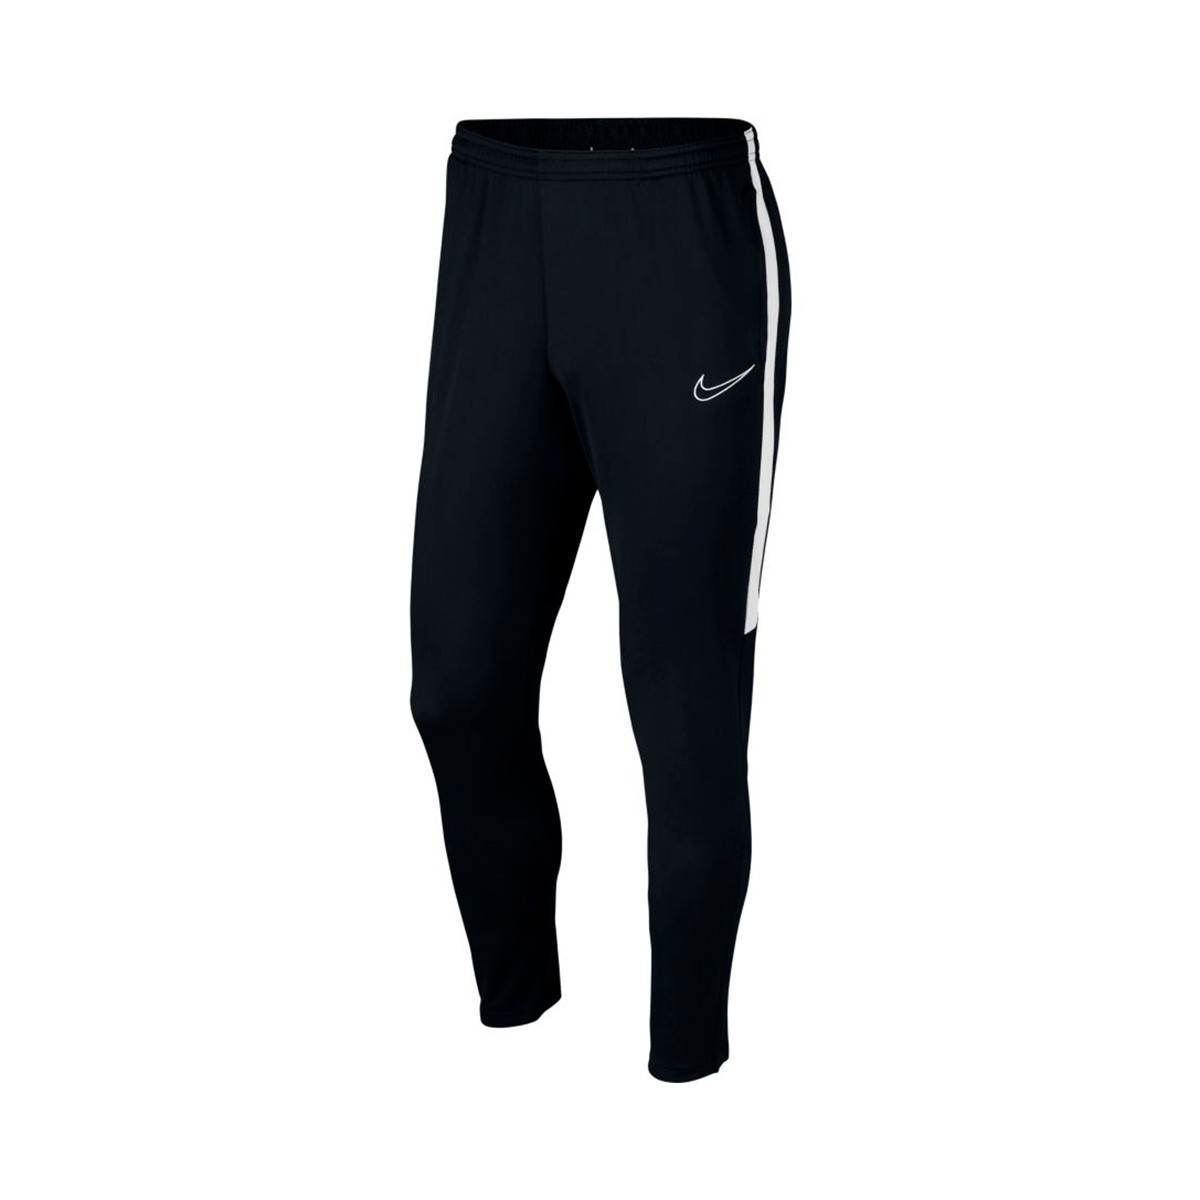 Long pants Nike Dri-FIT Academy Black-White - Football store Fútbol Emotion